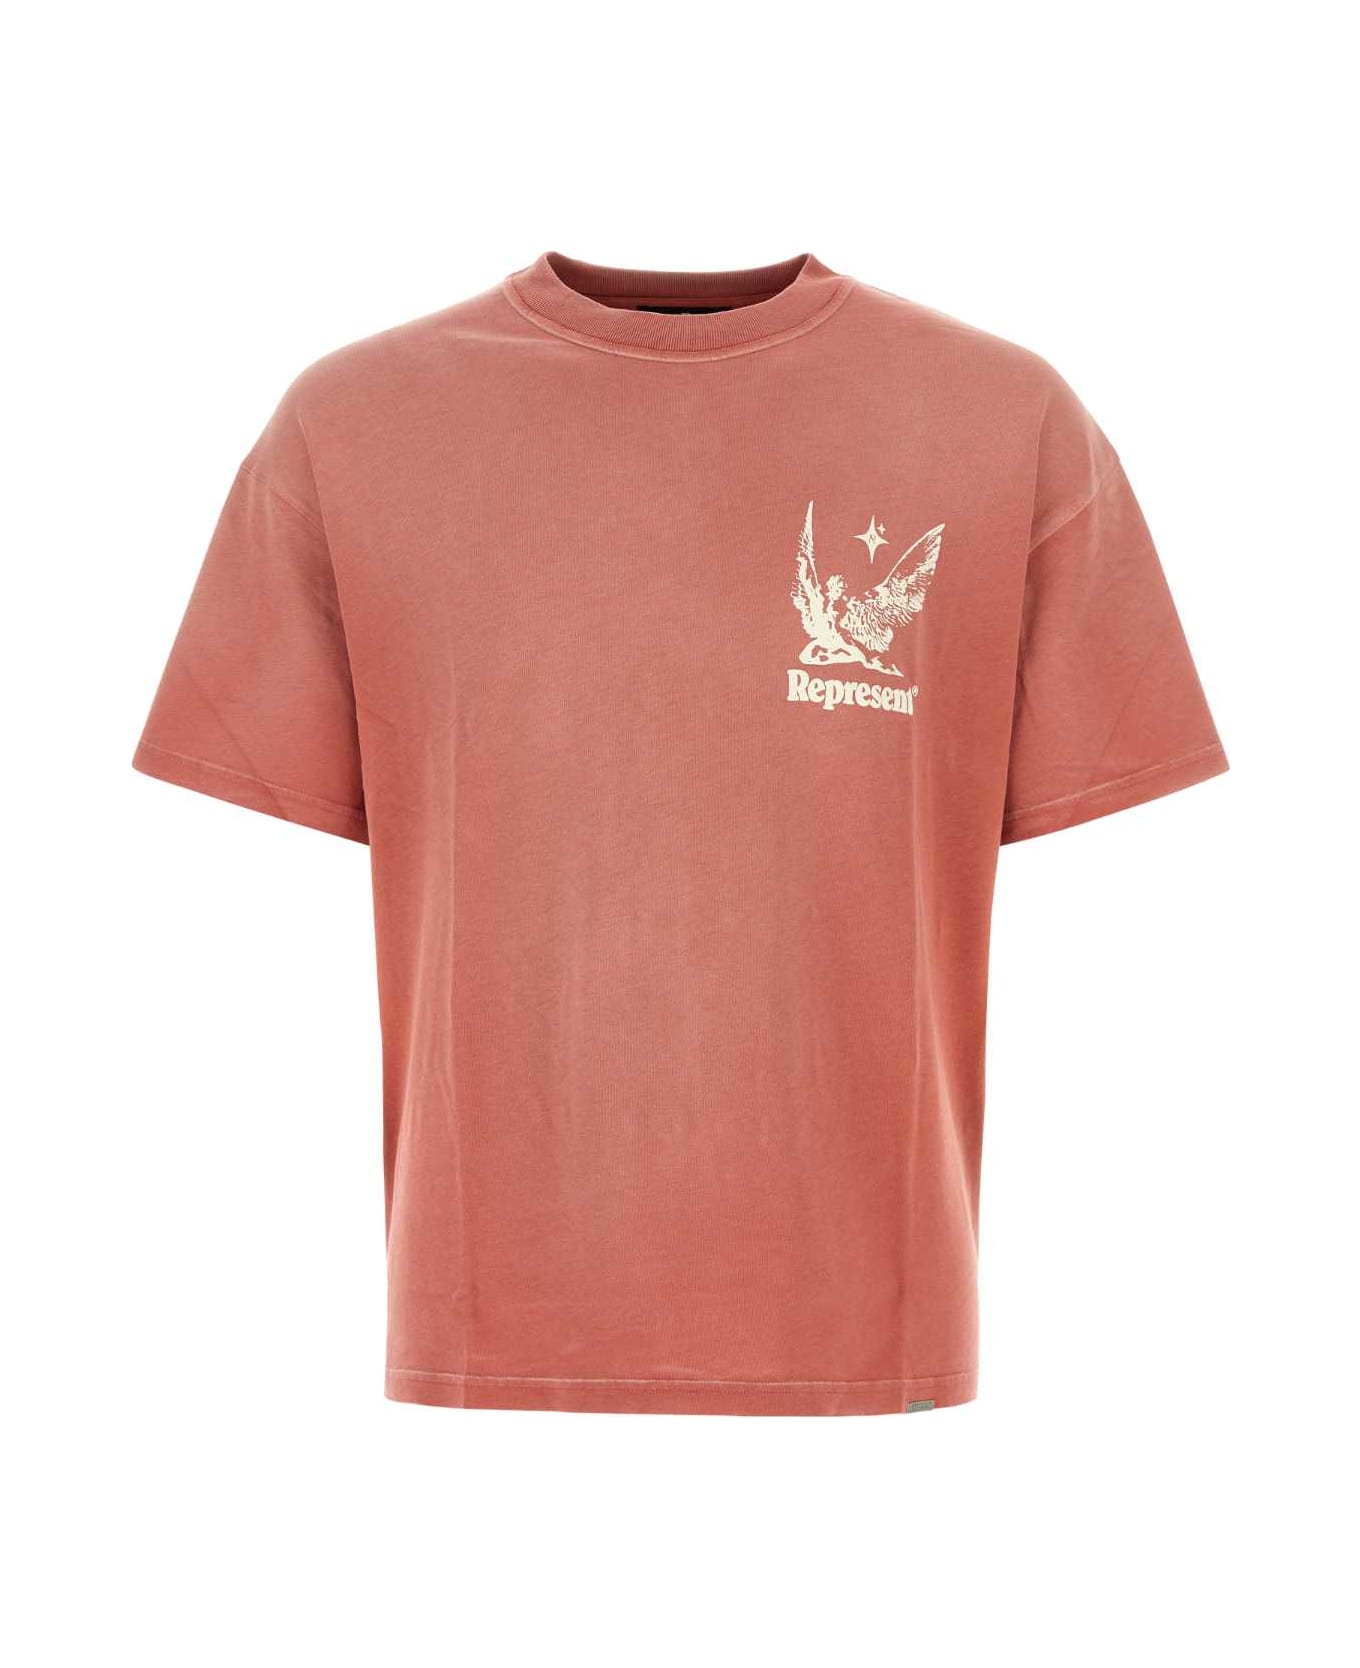 REPRESENT Brick Cotton Spirits Of Summer T-shirt - SUNRISE